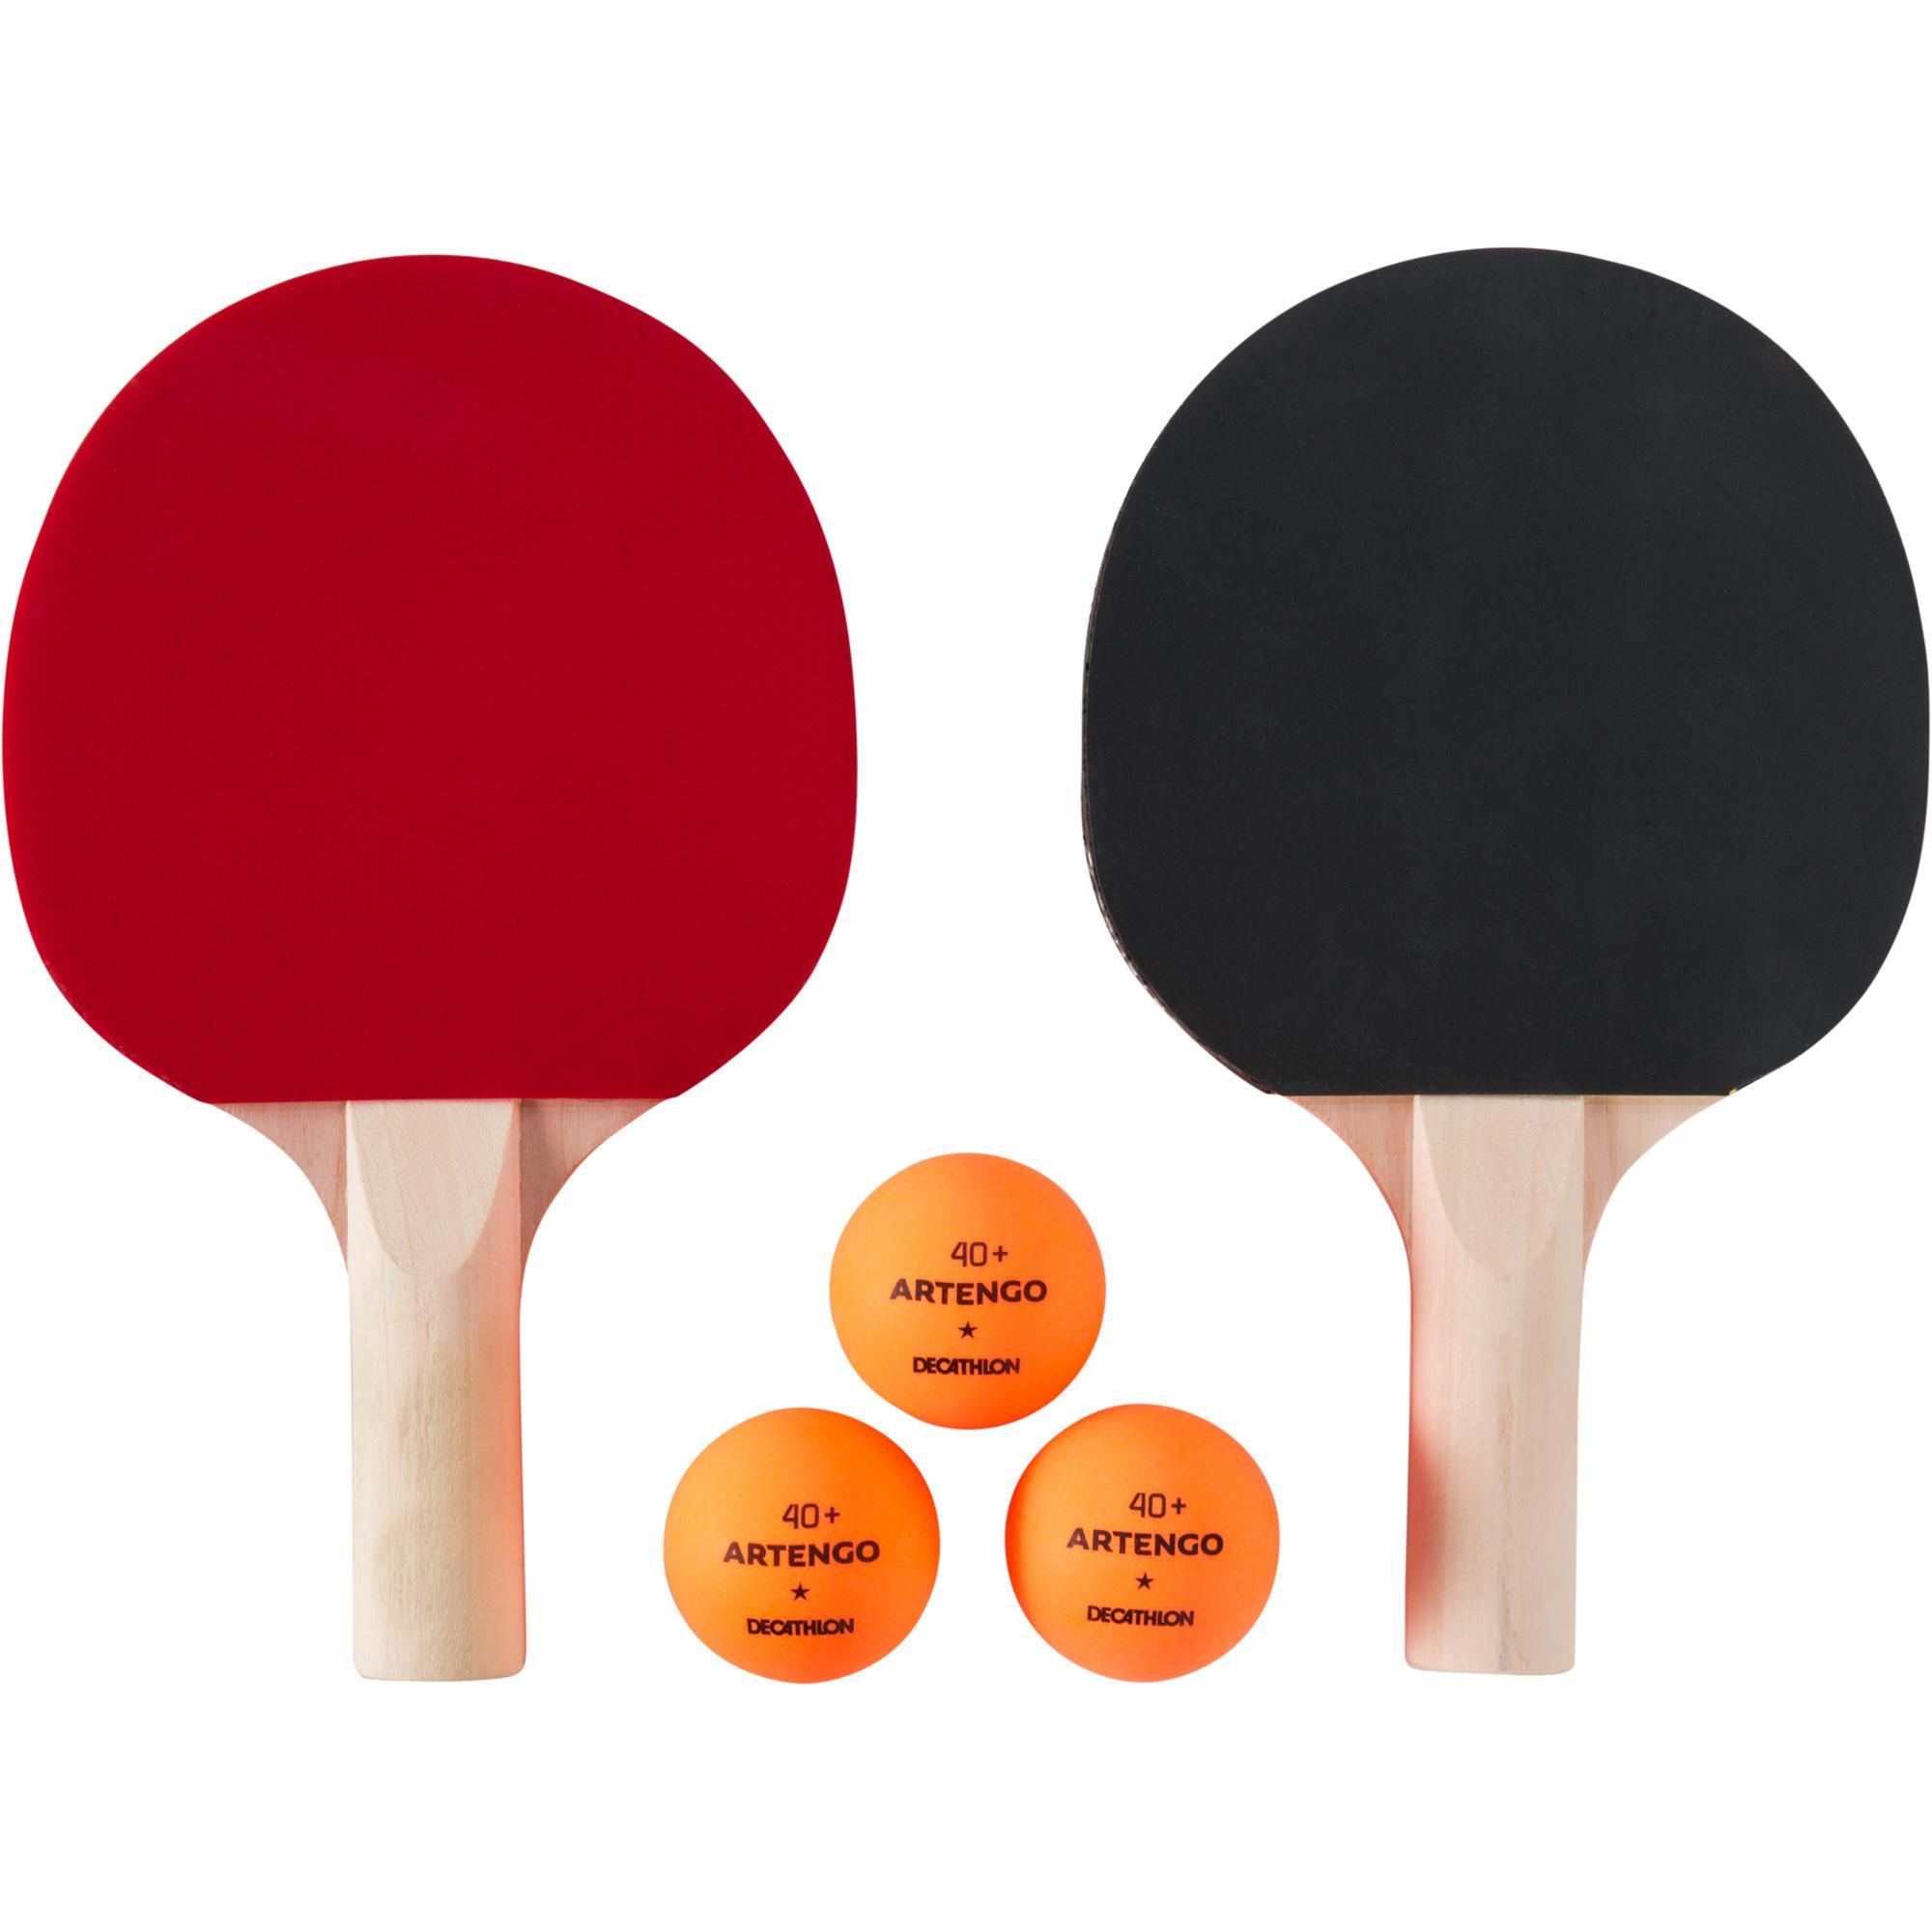 Uberpong Ping Pong Paddle Set with 2 3 Star Balls Real Wood 5 Ply Blades Premium TT Bats Tennis Rackets 